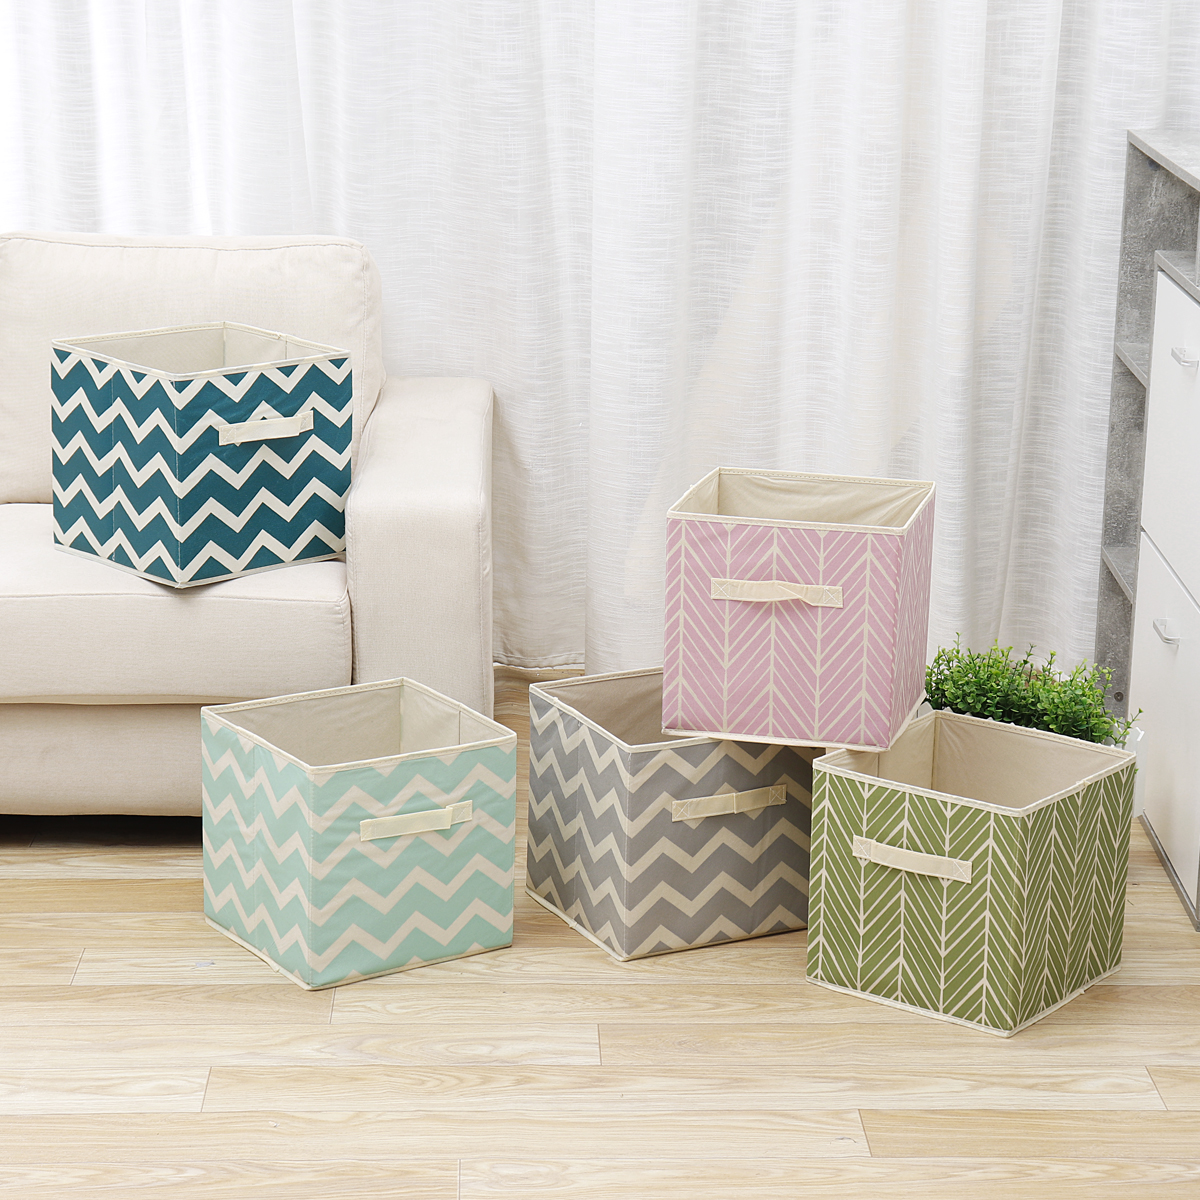 Foldable-Canvas-Storage-Box-Fabric-Cube-Cloth-Basket-Bag-Home-Cosmetic-Case-Basket-Desk-Organizer-Bi-1746401-22